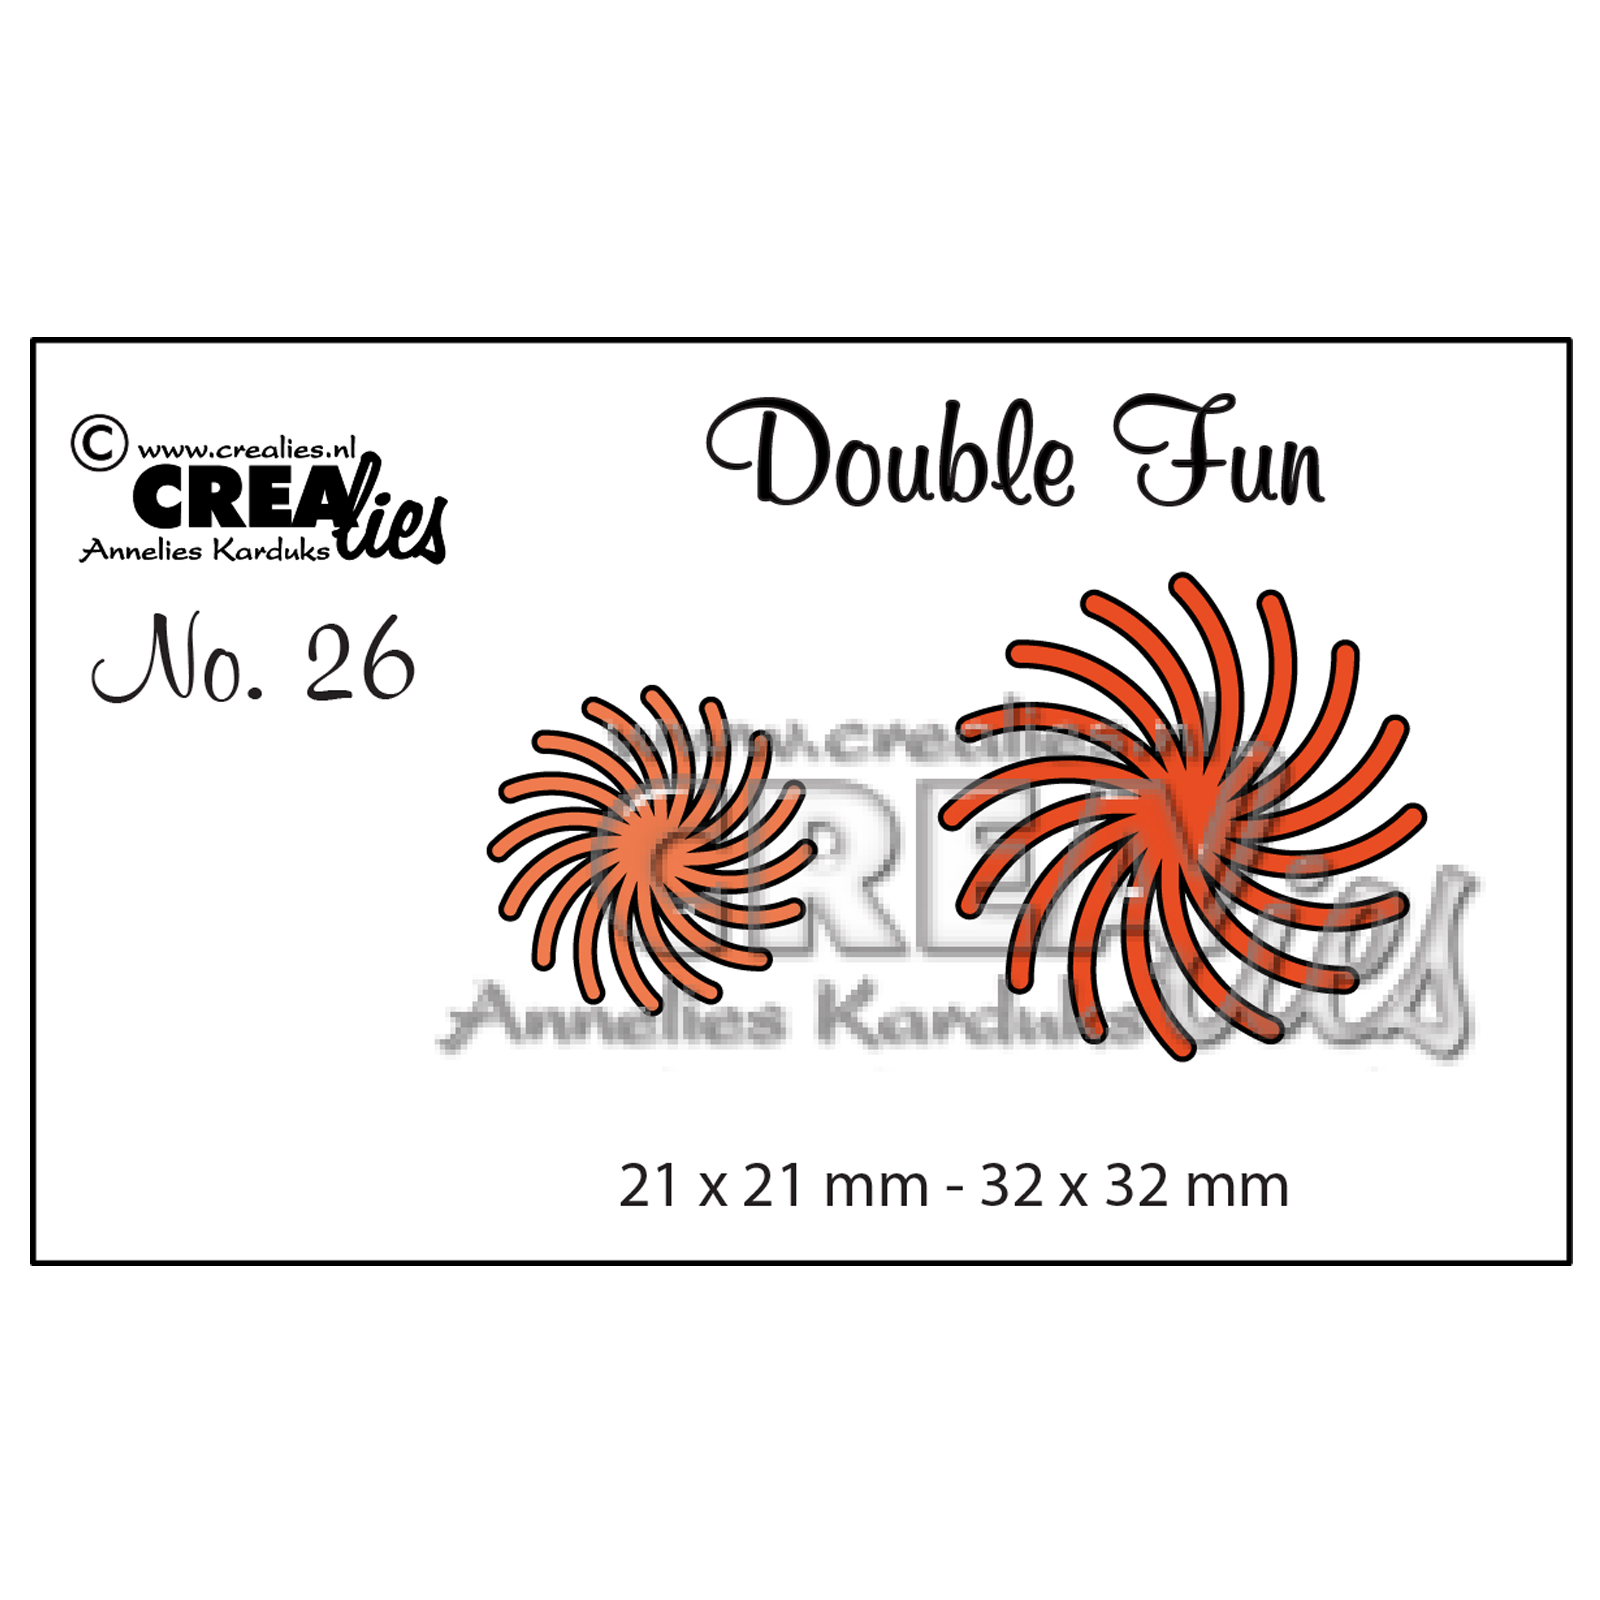 Crealies • Double fun Stanzschablone no.26 verdrehte Sonne